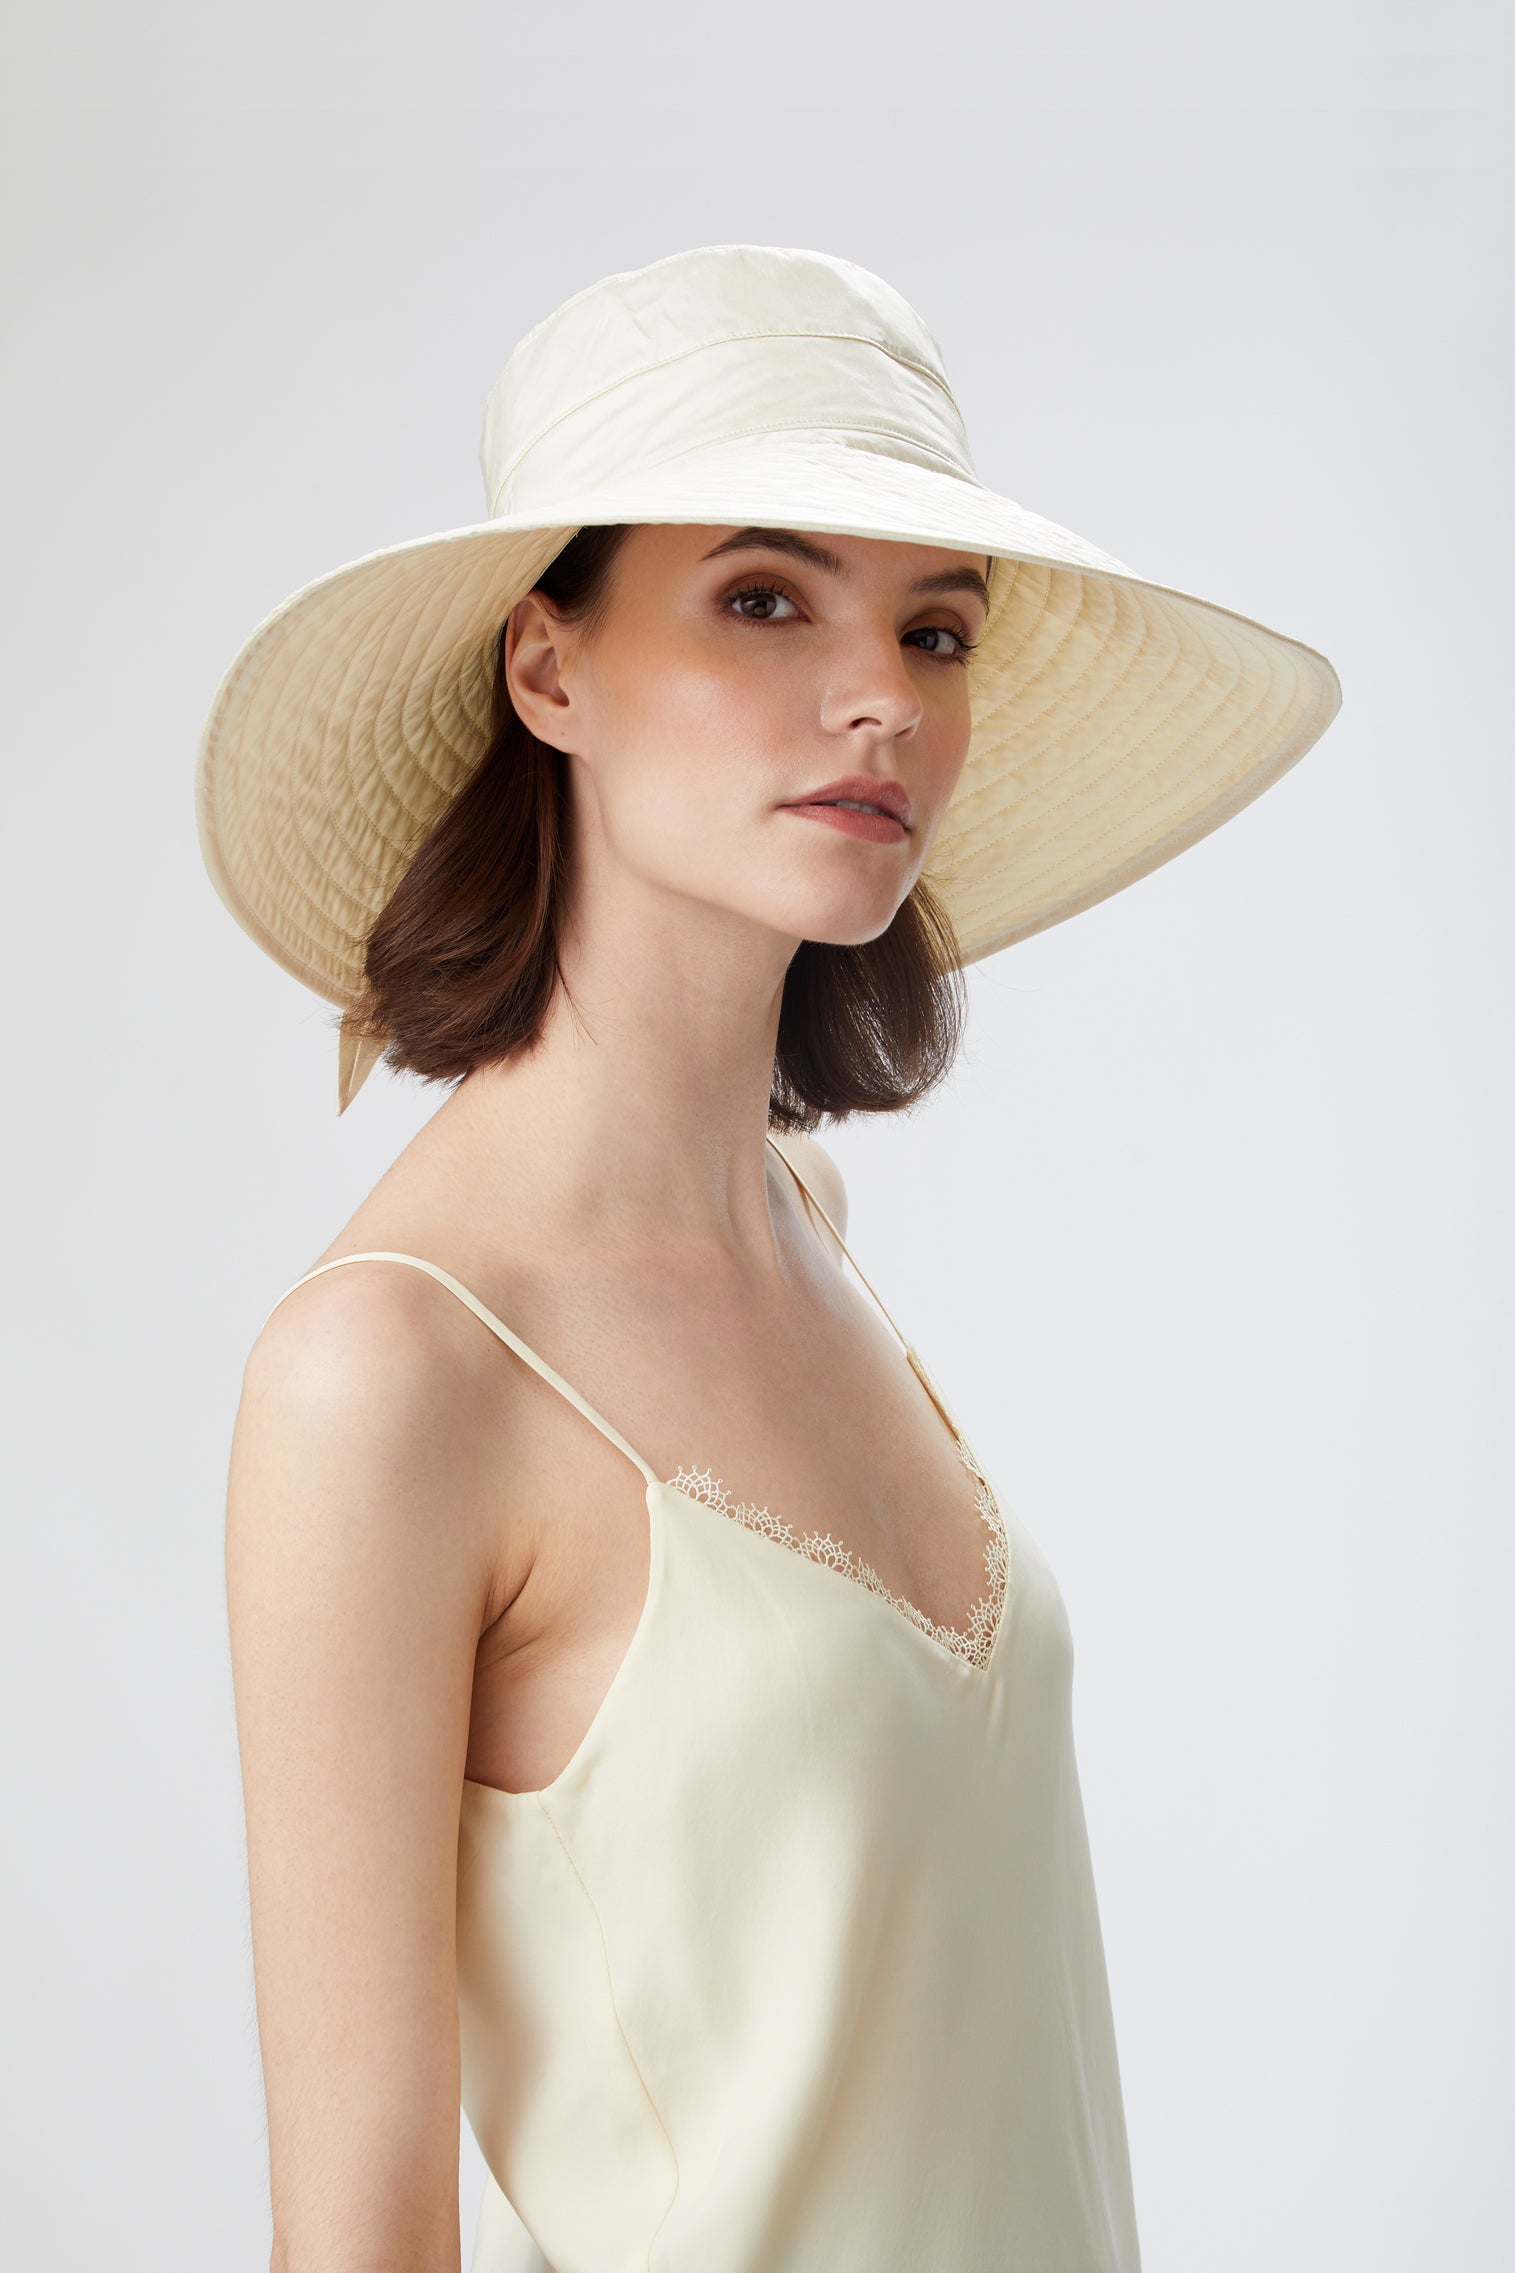 Clemence Silk Sun Hat - Panamas, Straw and Sun Hats for Women - Lock & Co. Hatters London UK